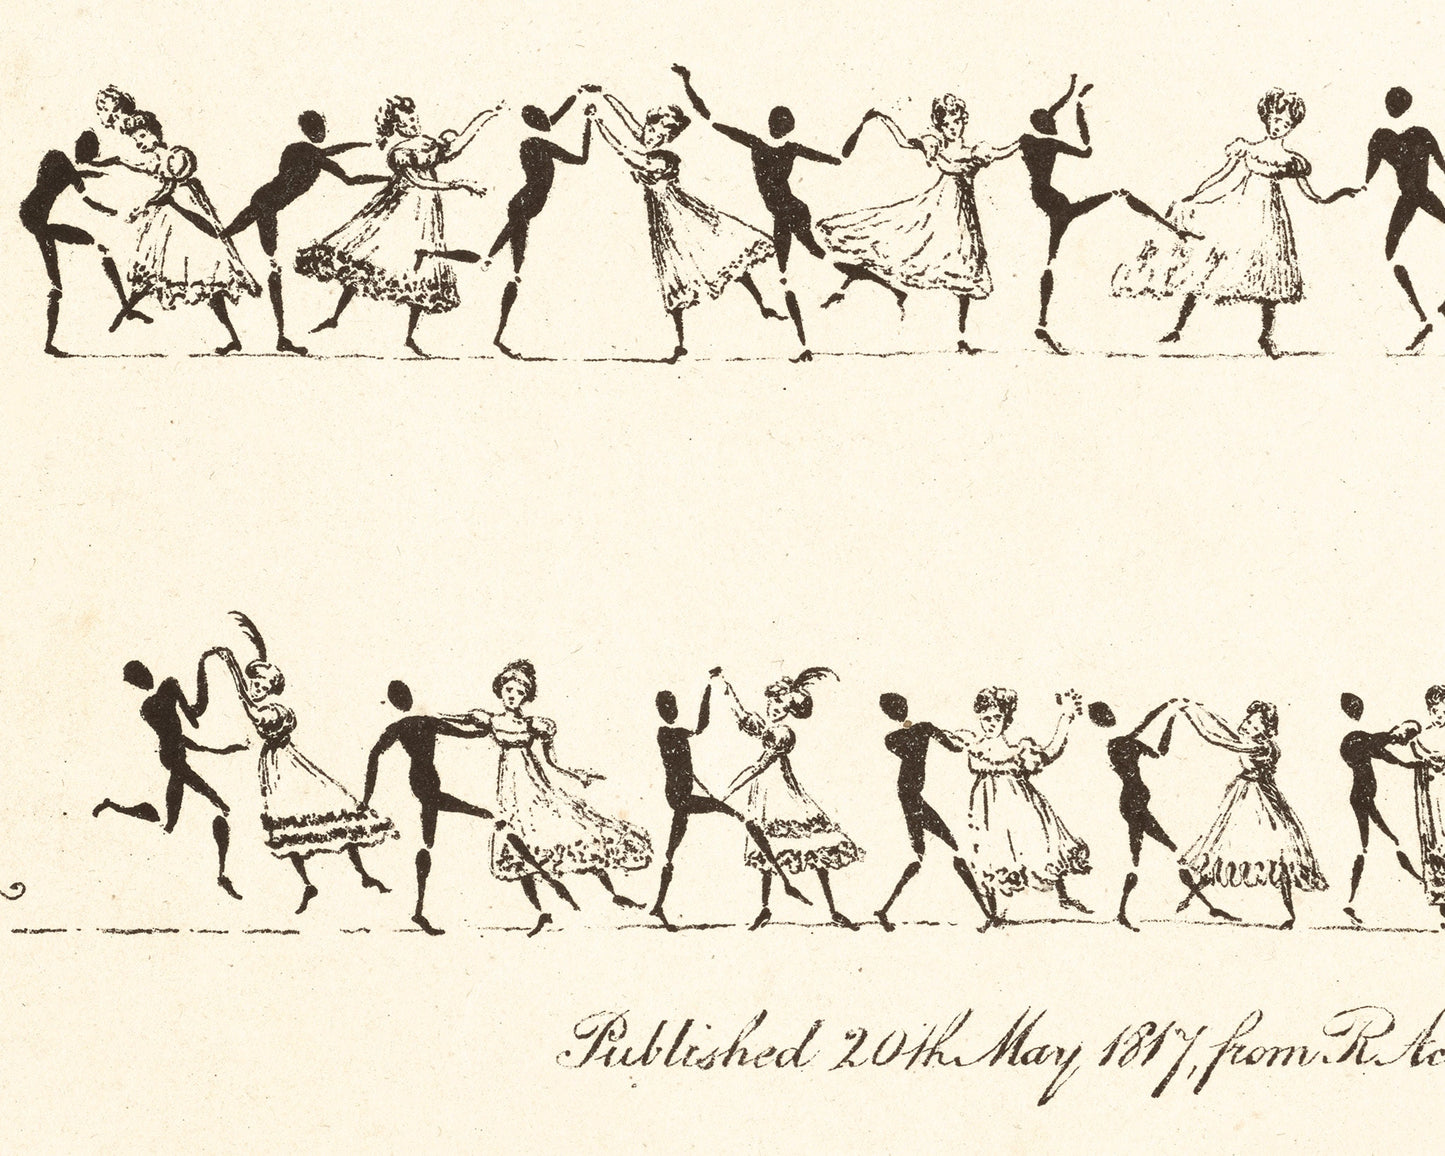 Dance figures art print | Dancing at a ball | Ackerman, 1817 | 19th century fashion | Pride & Prejudice era wall art | Modern Vintage decor